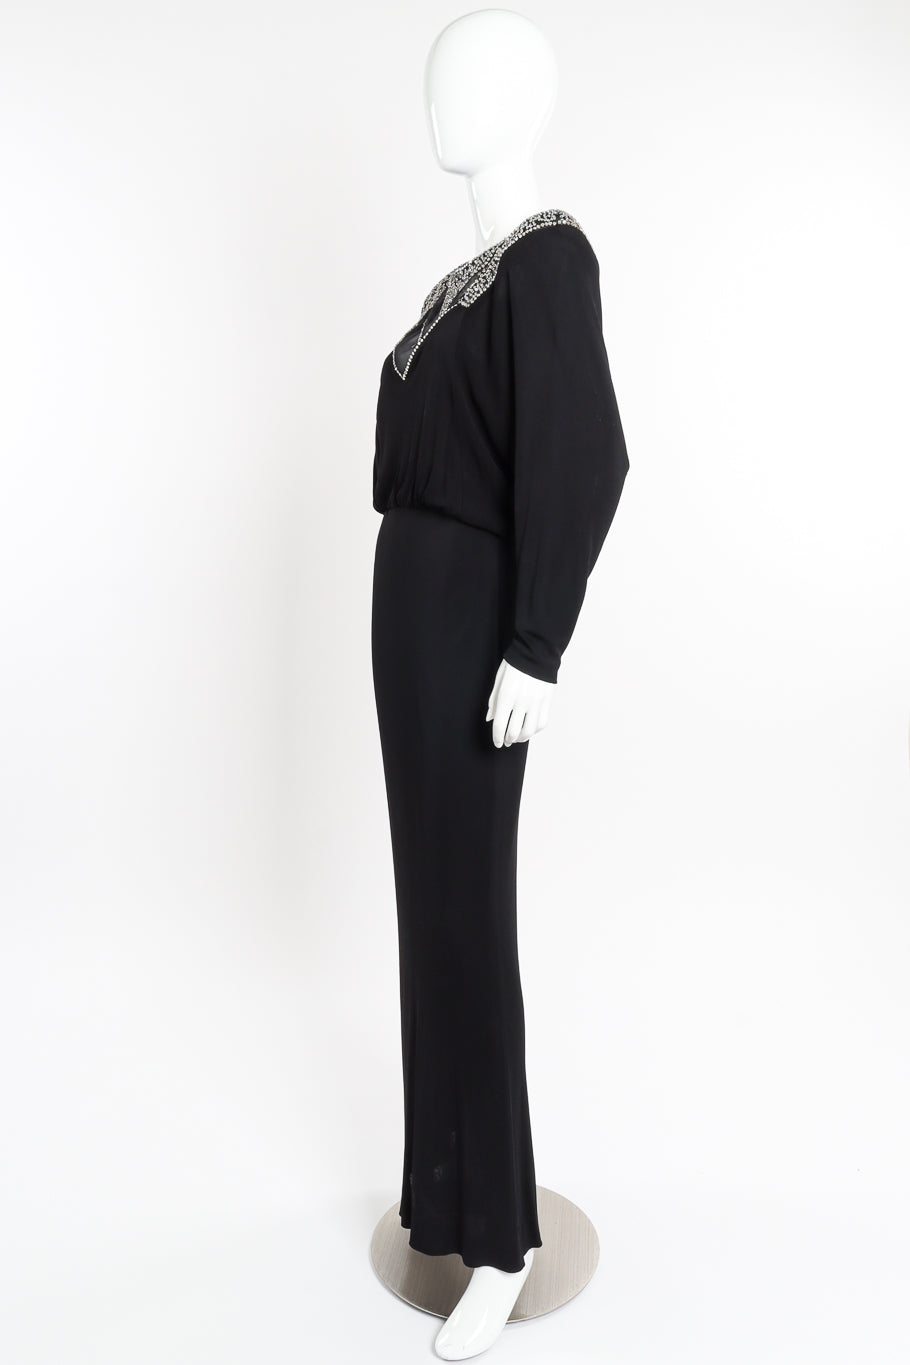 Beaded Blouson Dolman Dress by Victoria Royal on mannequin side @recessla